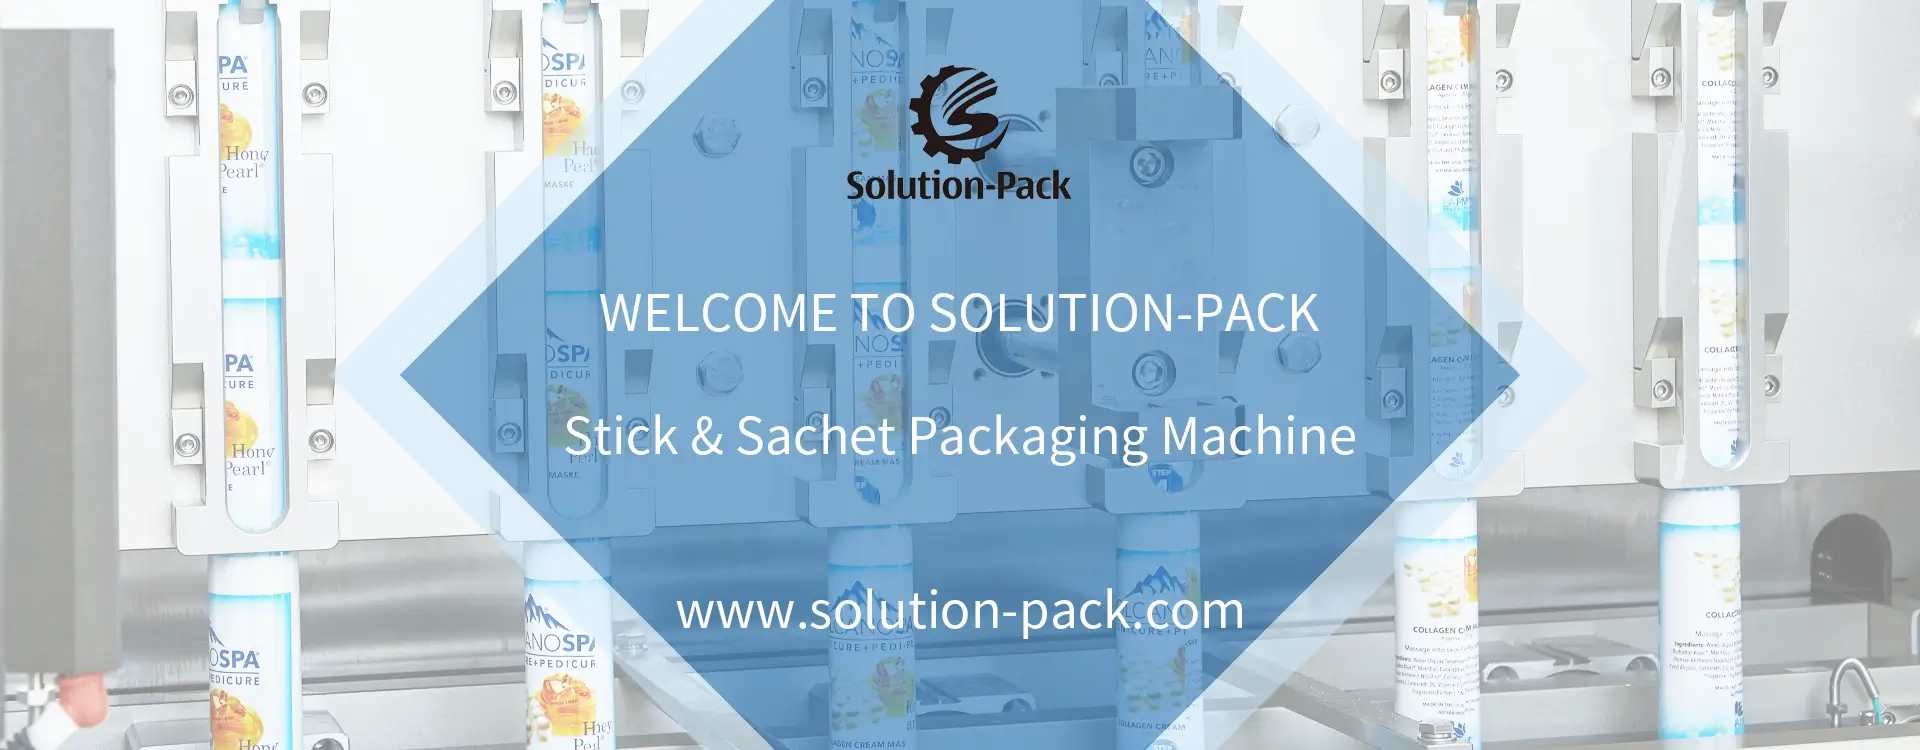 Model KB-100 Automatic Center-Seal Granule Sachet Packaging Machine Unit Bottom Banner Picture | Solution-Pack